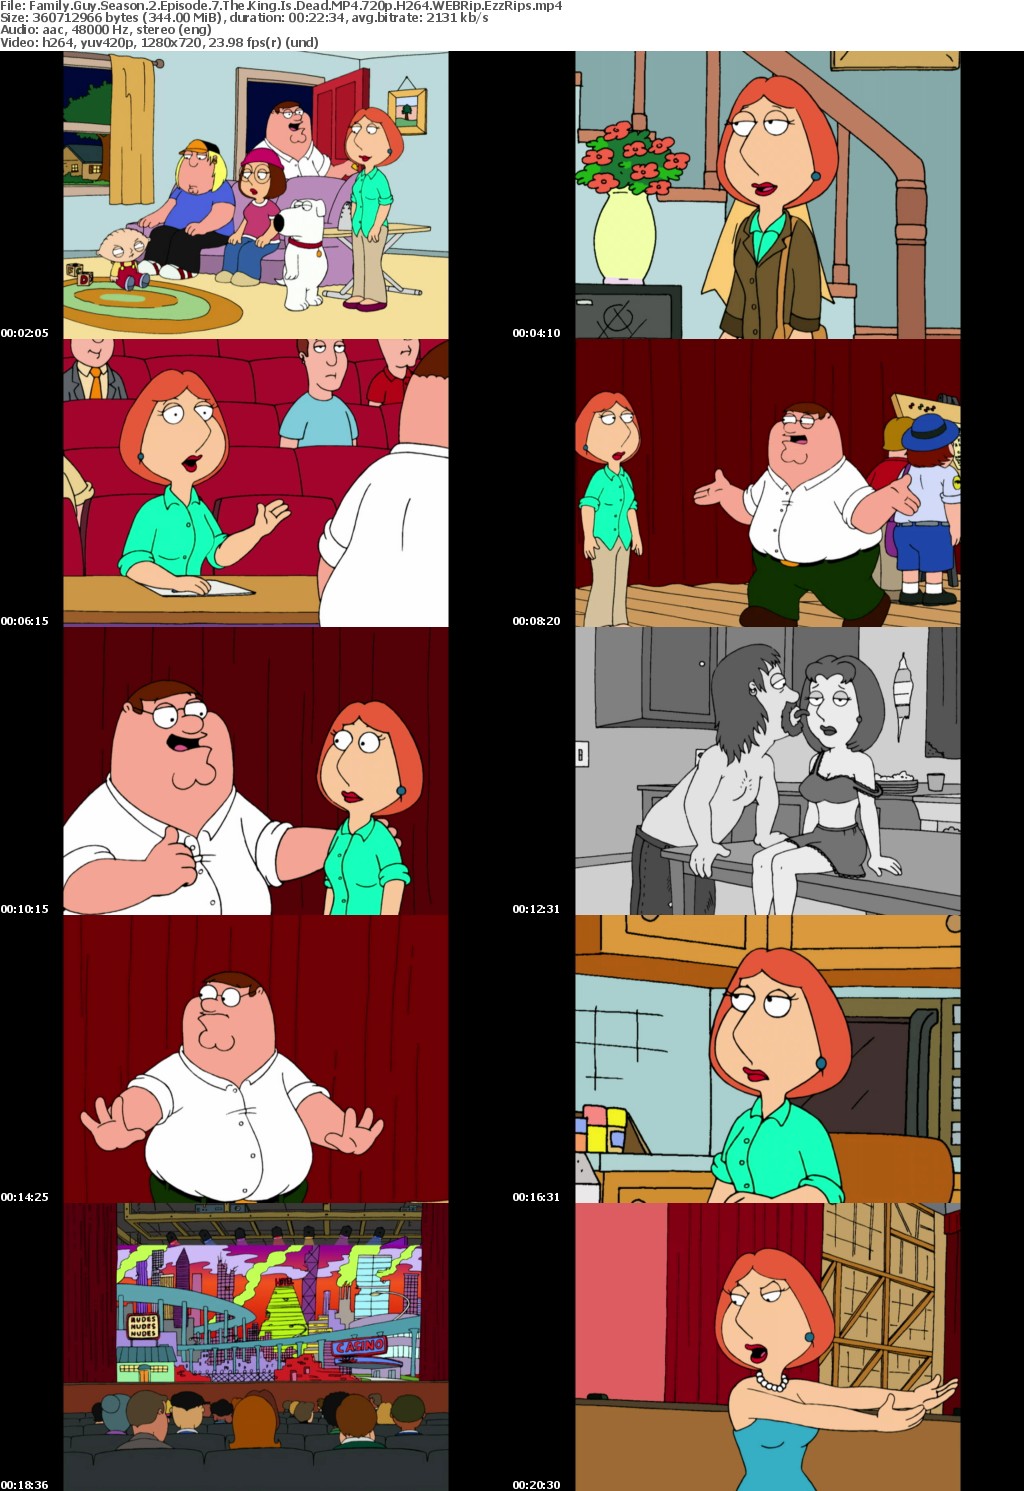 Family Guy Season 2 Episode 7 The King Is Dead MP4 720p H264 WEBRip EzzRips